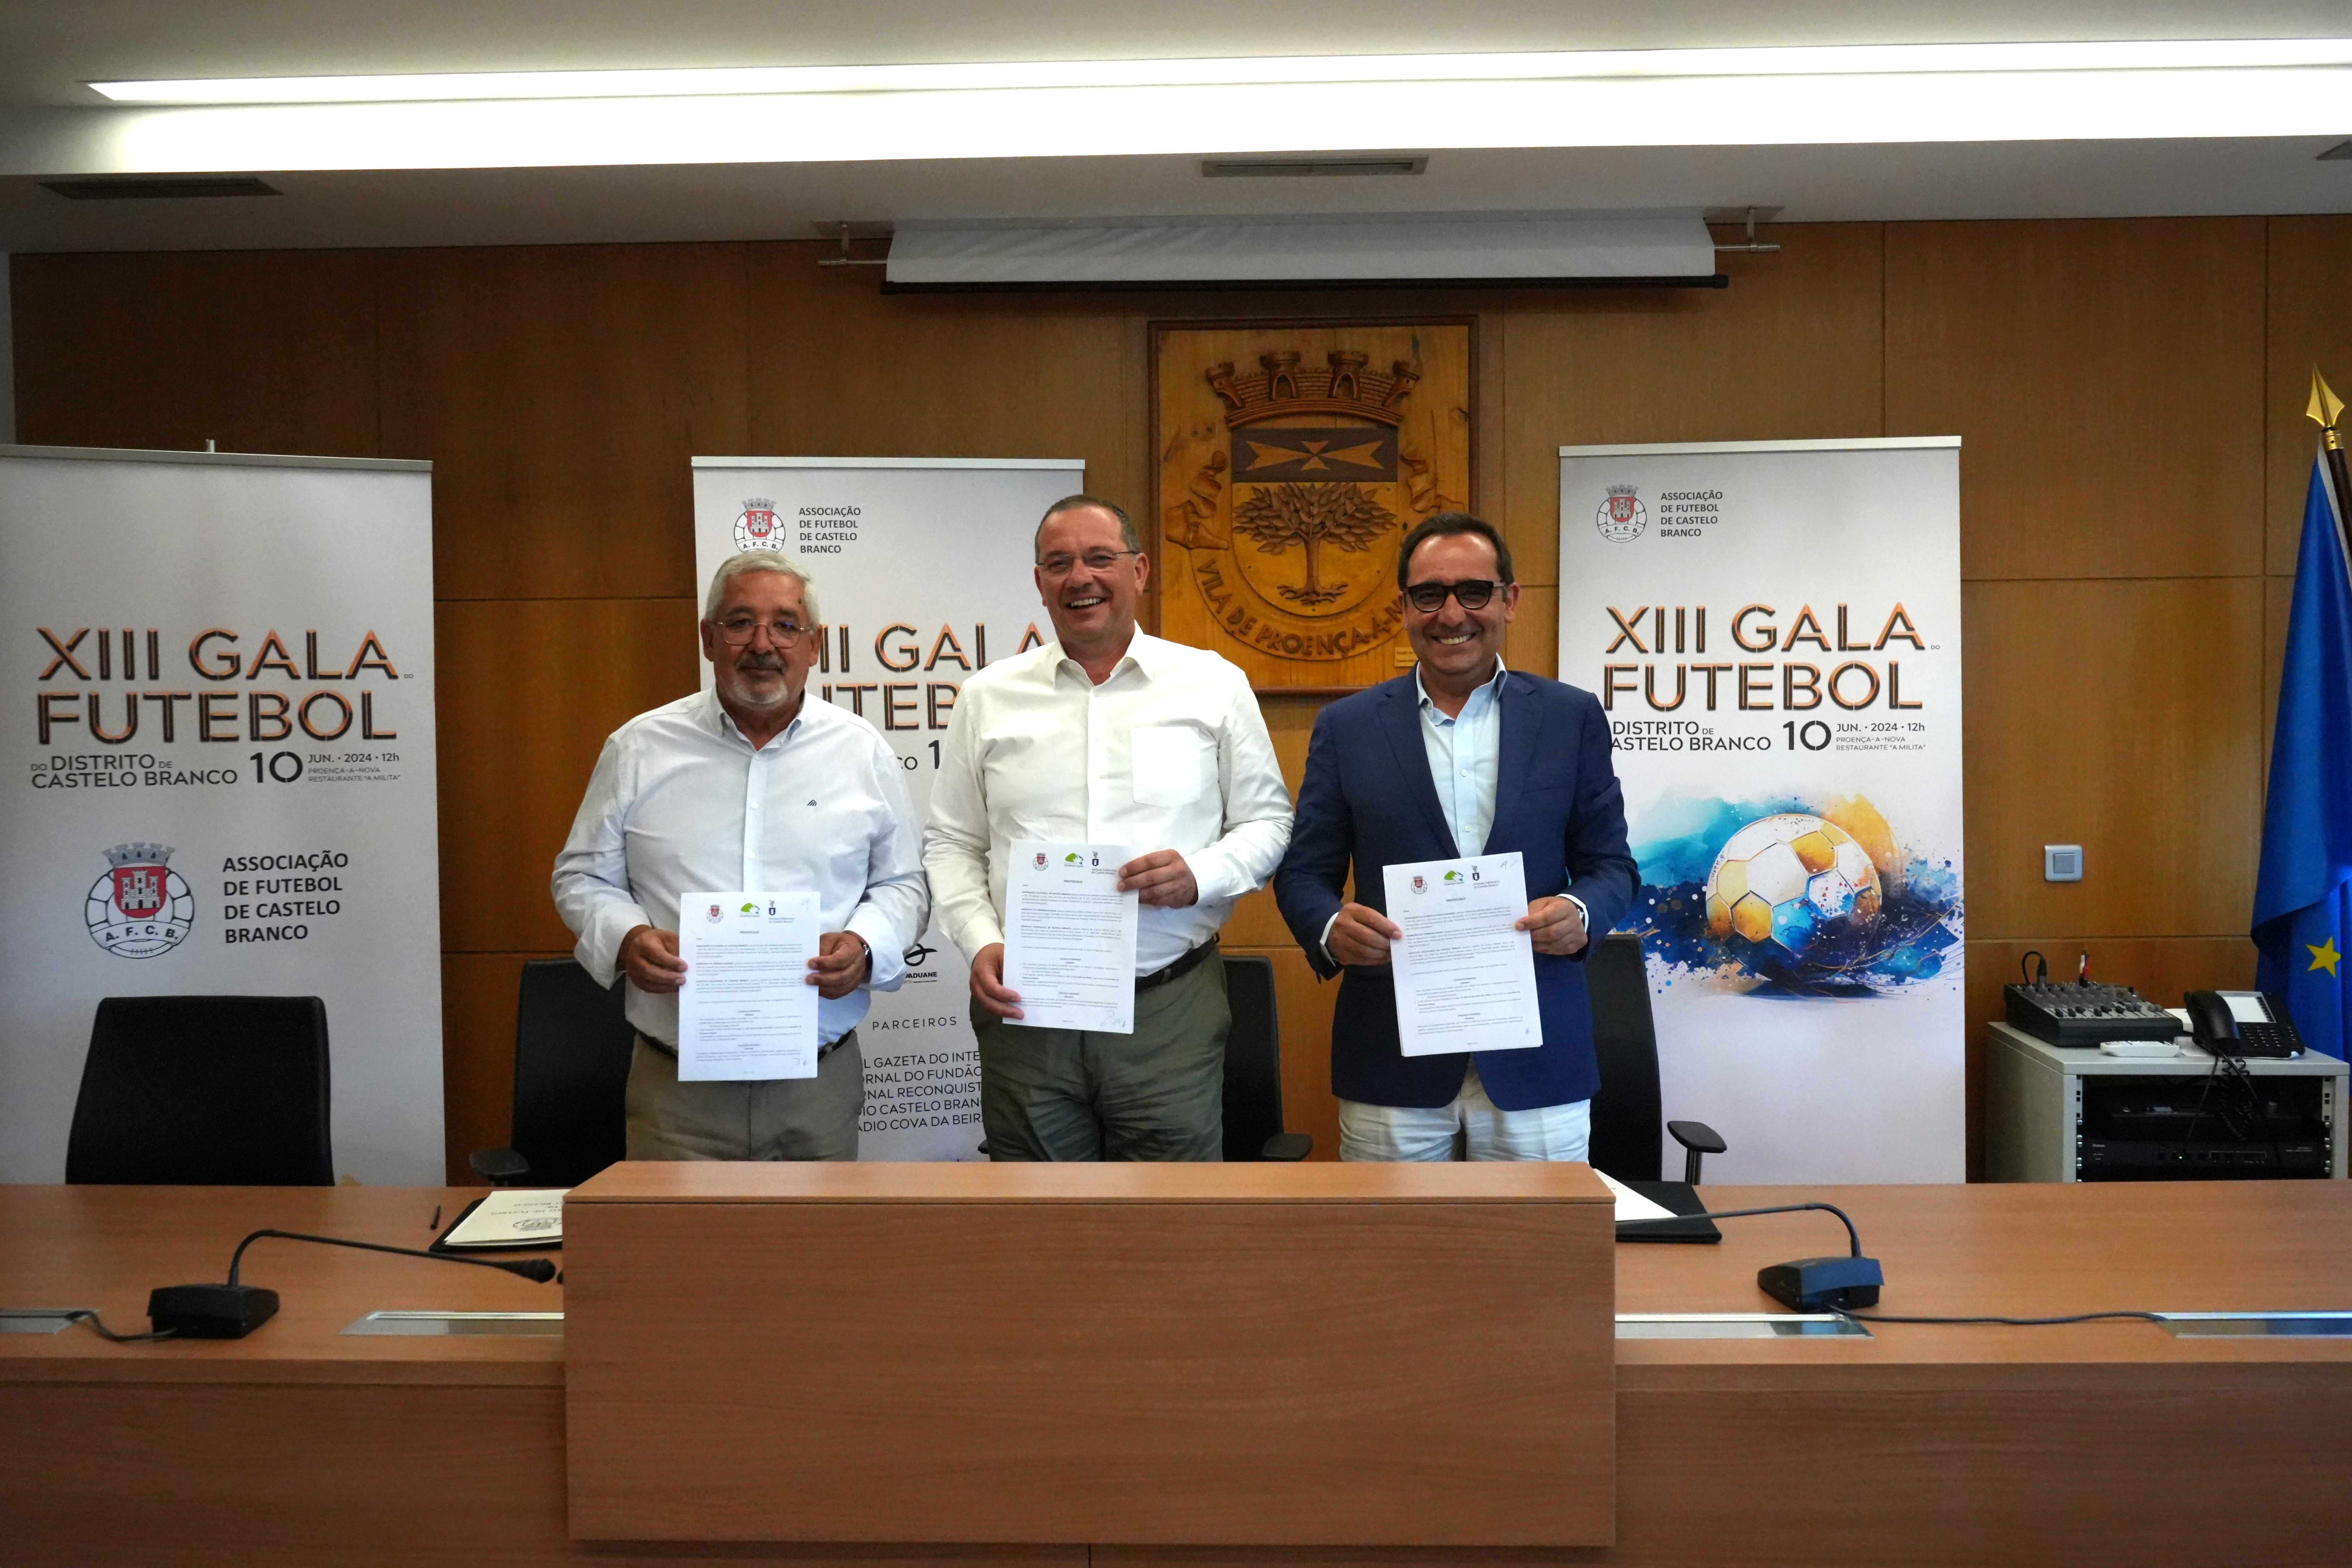 XIII Gala Futebol Distrital: AFCB, Município Proença-a-Nova e IPCB assinam protocolo